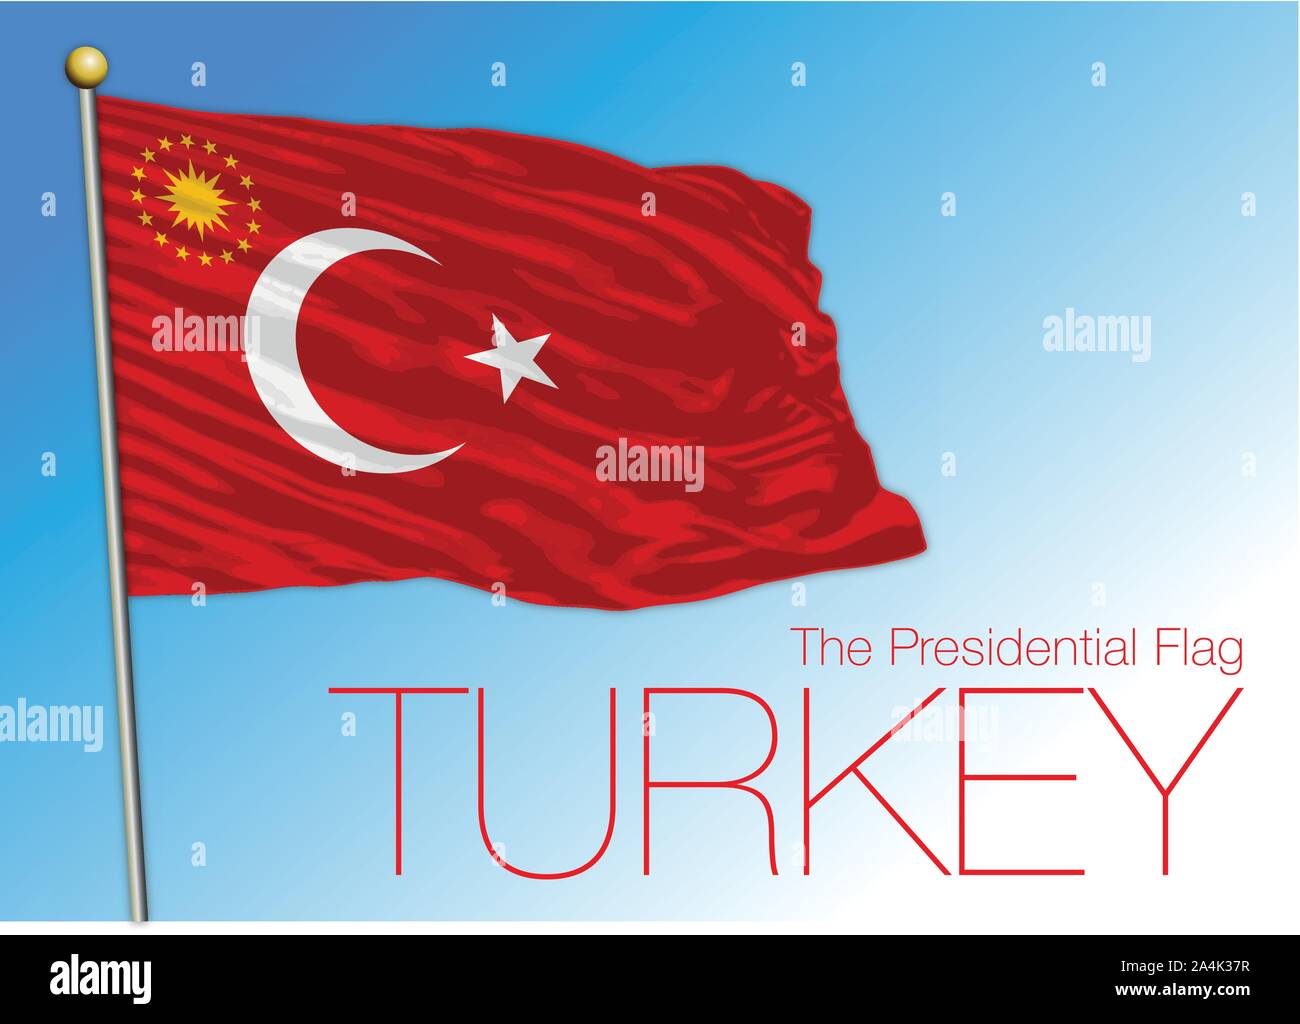 Turkey, official presidential flag, vector illustration Stock Vector